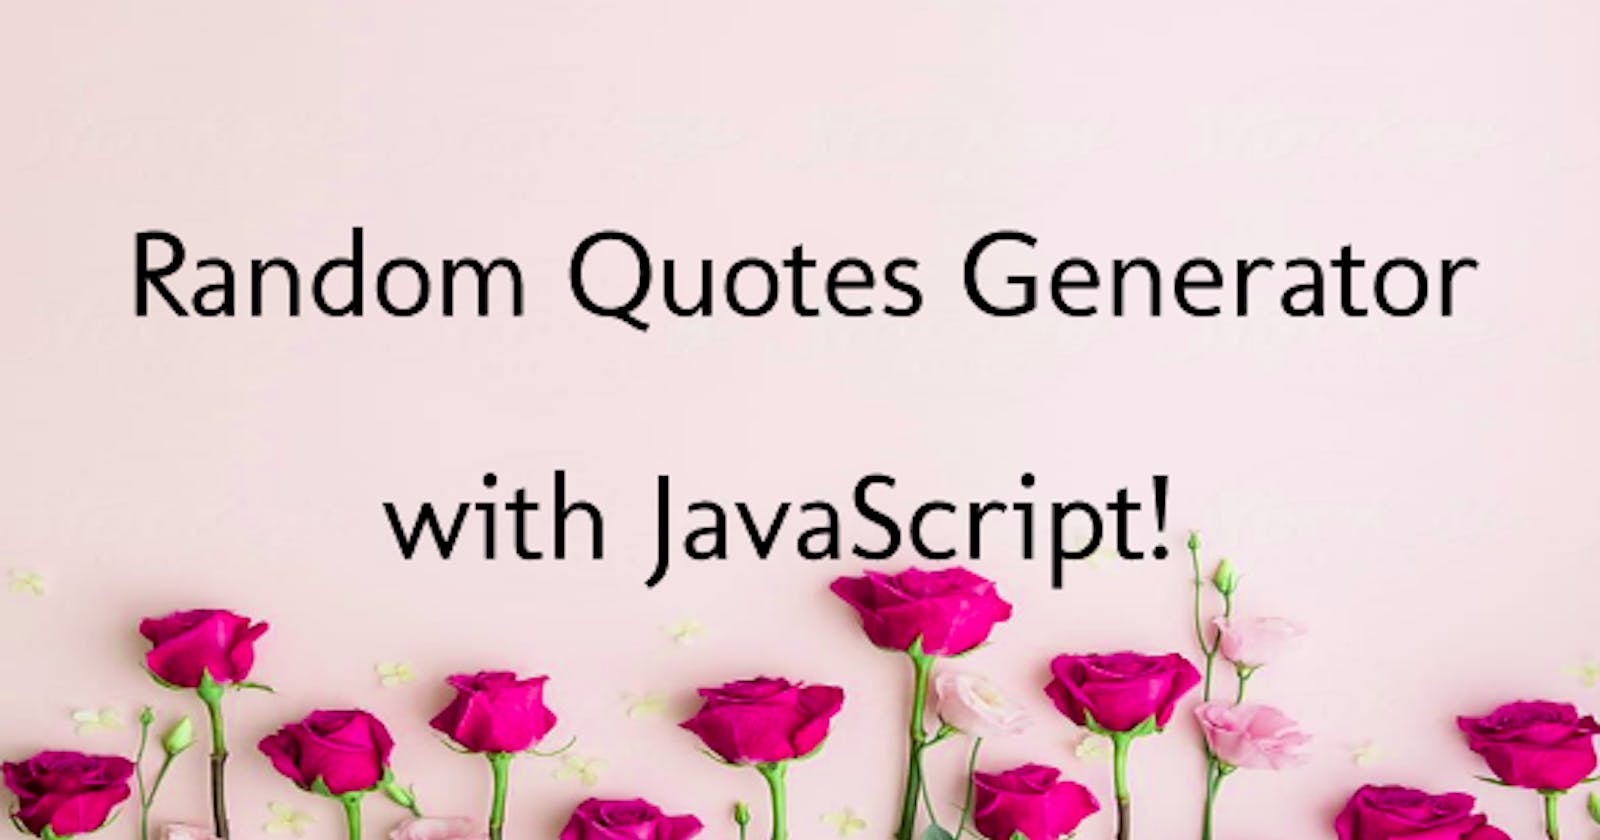 Random quotes generator with JavaScript!